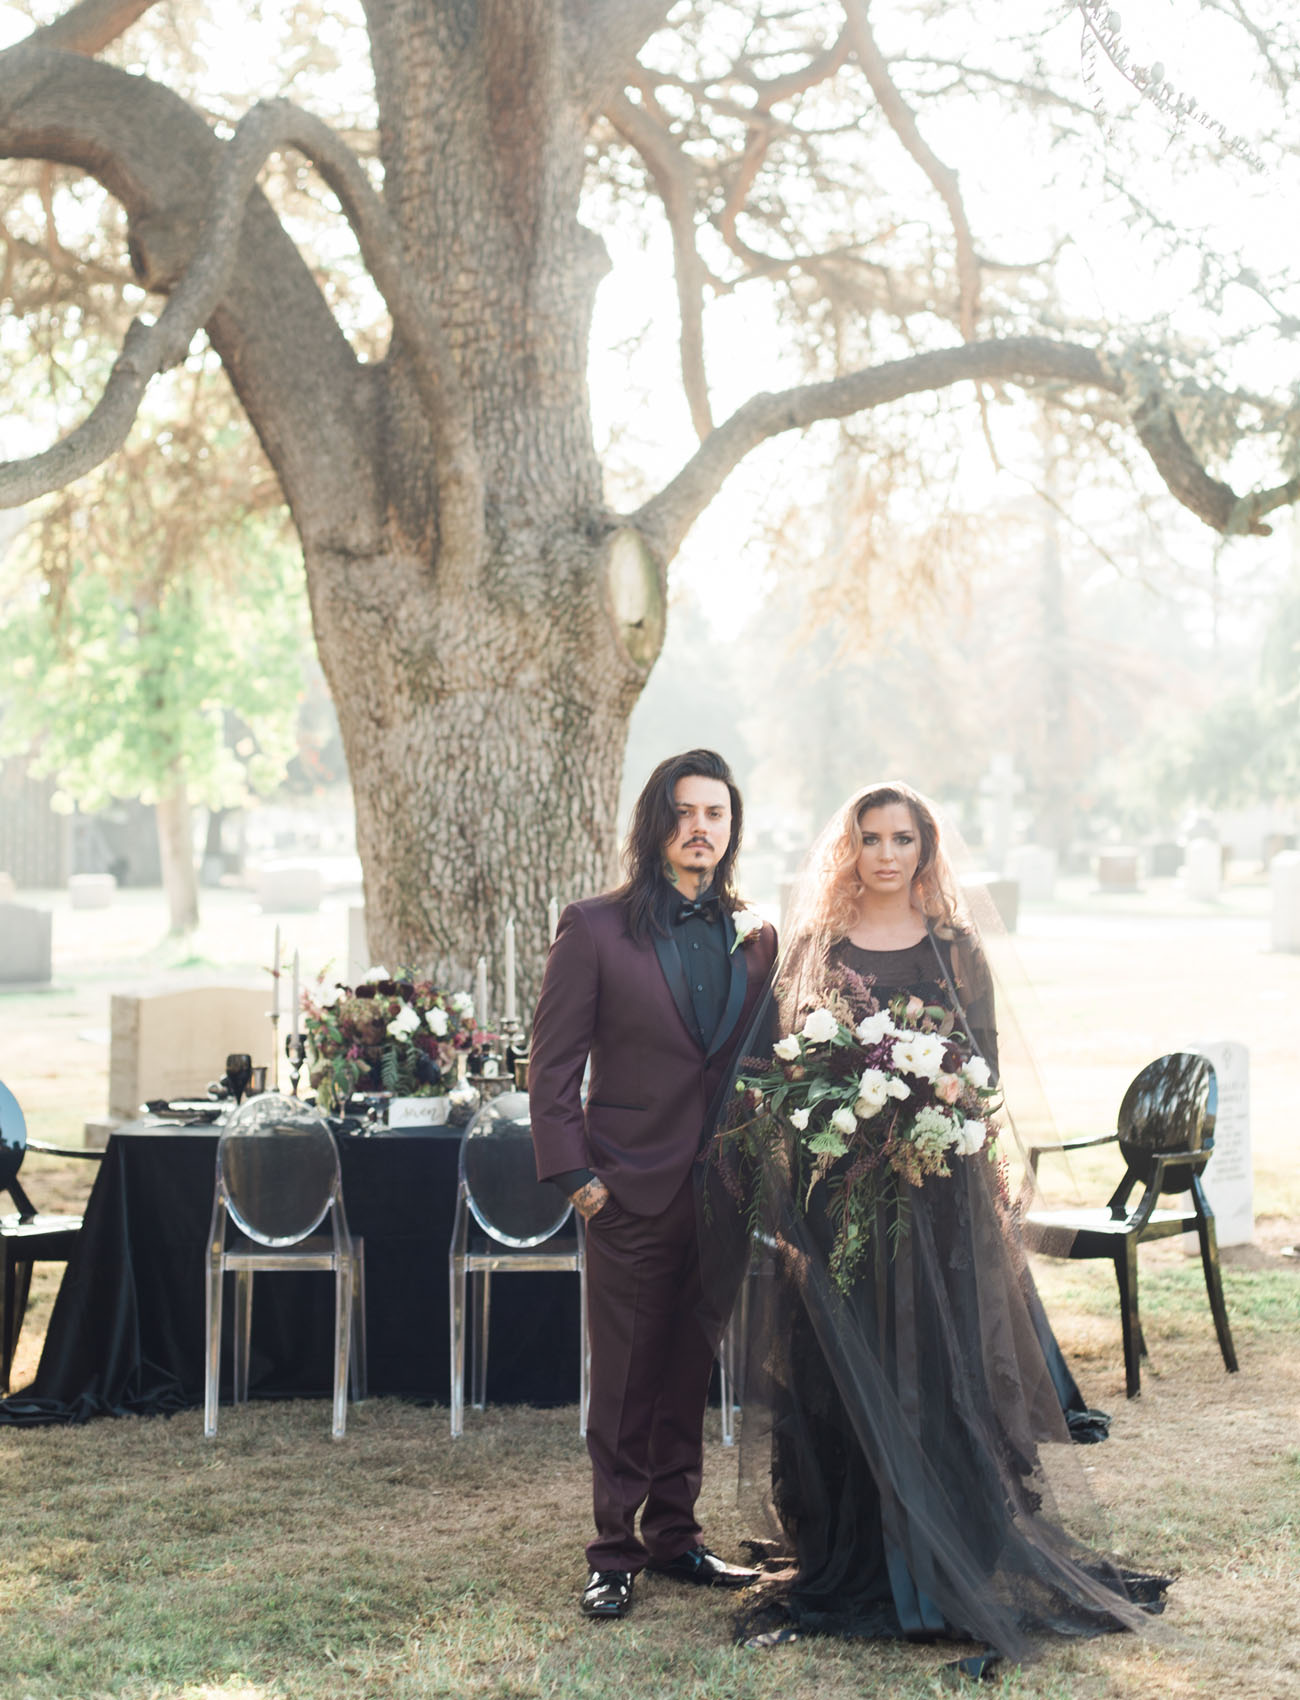 ‘Til Death Do Us Part: a Wedding in a Cemetery